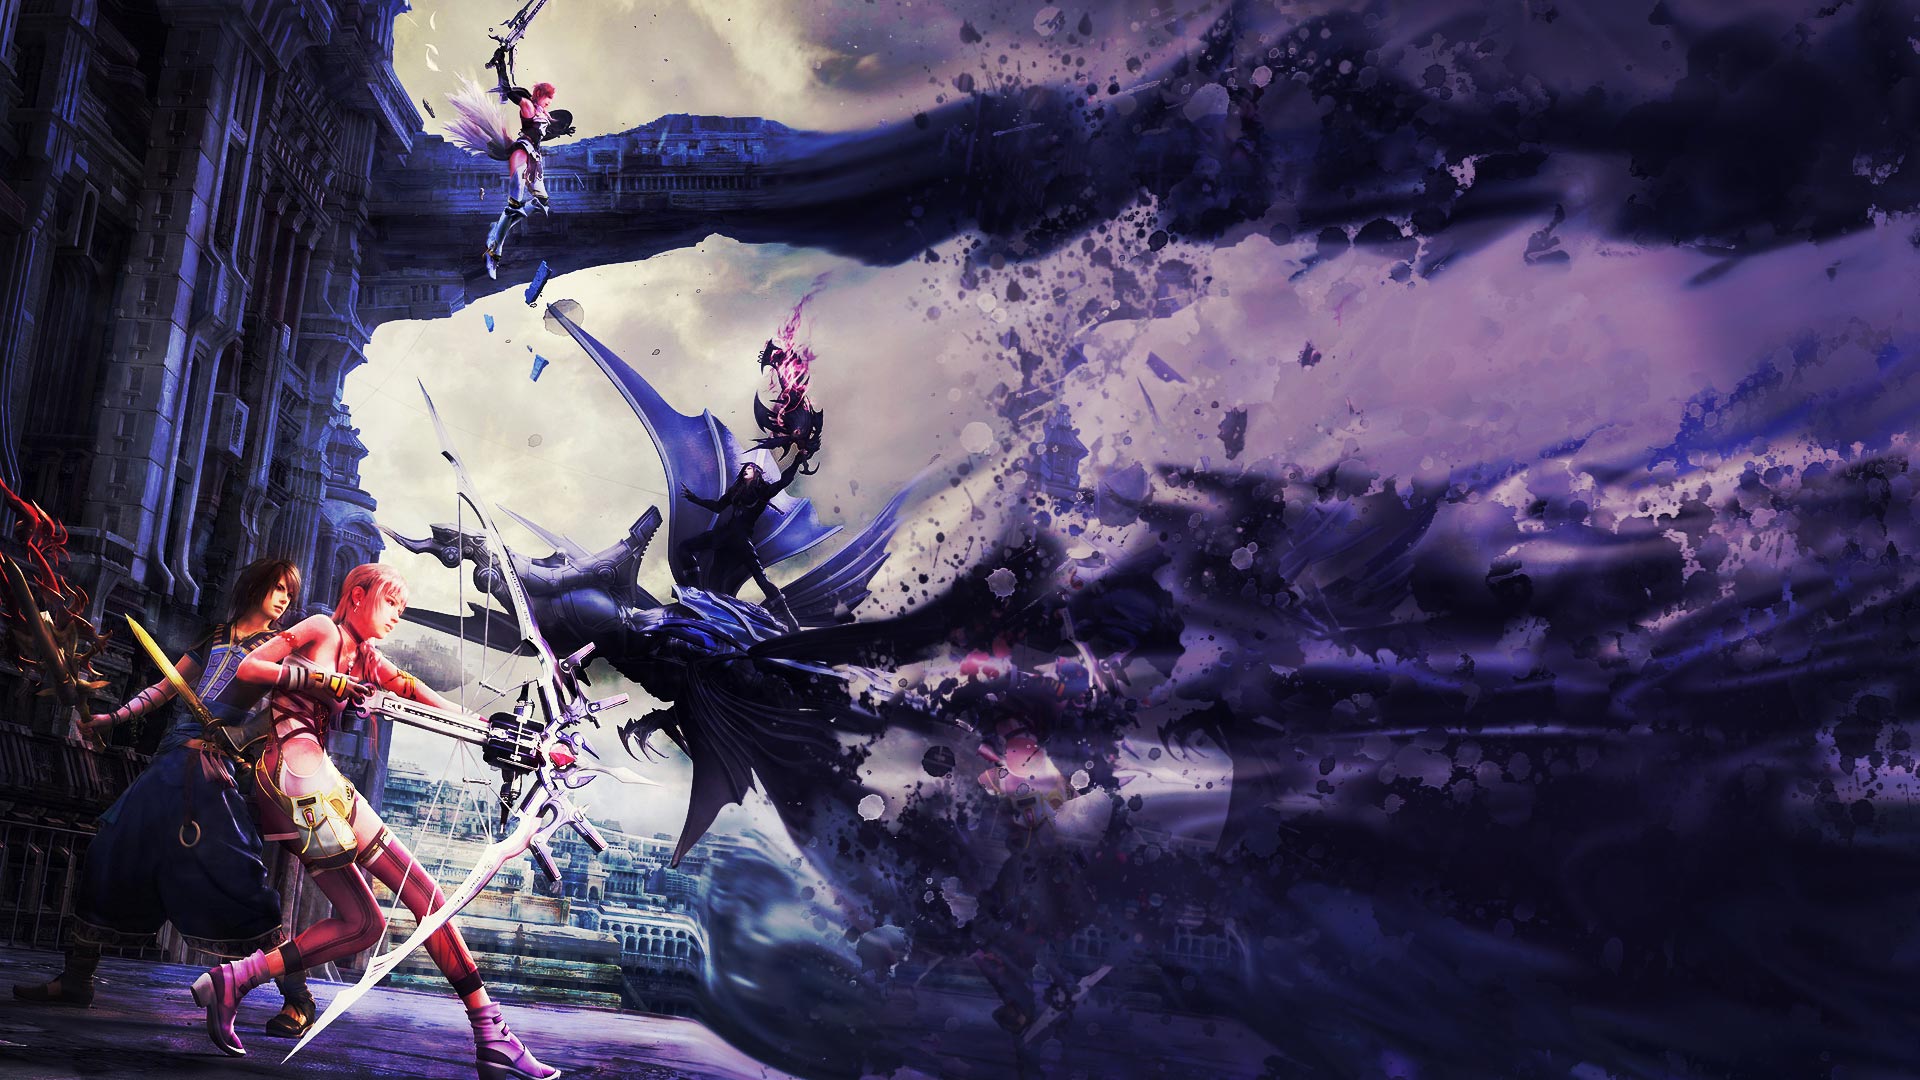 Final Fantasy Xiii Versus Wallpaper 1080p